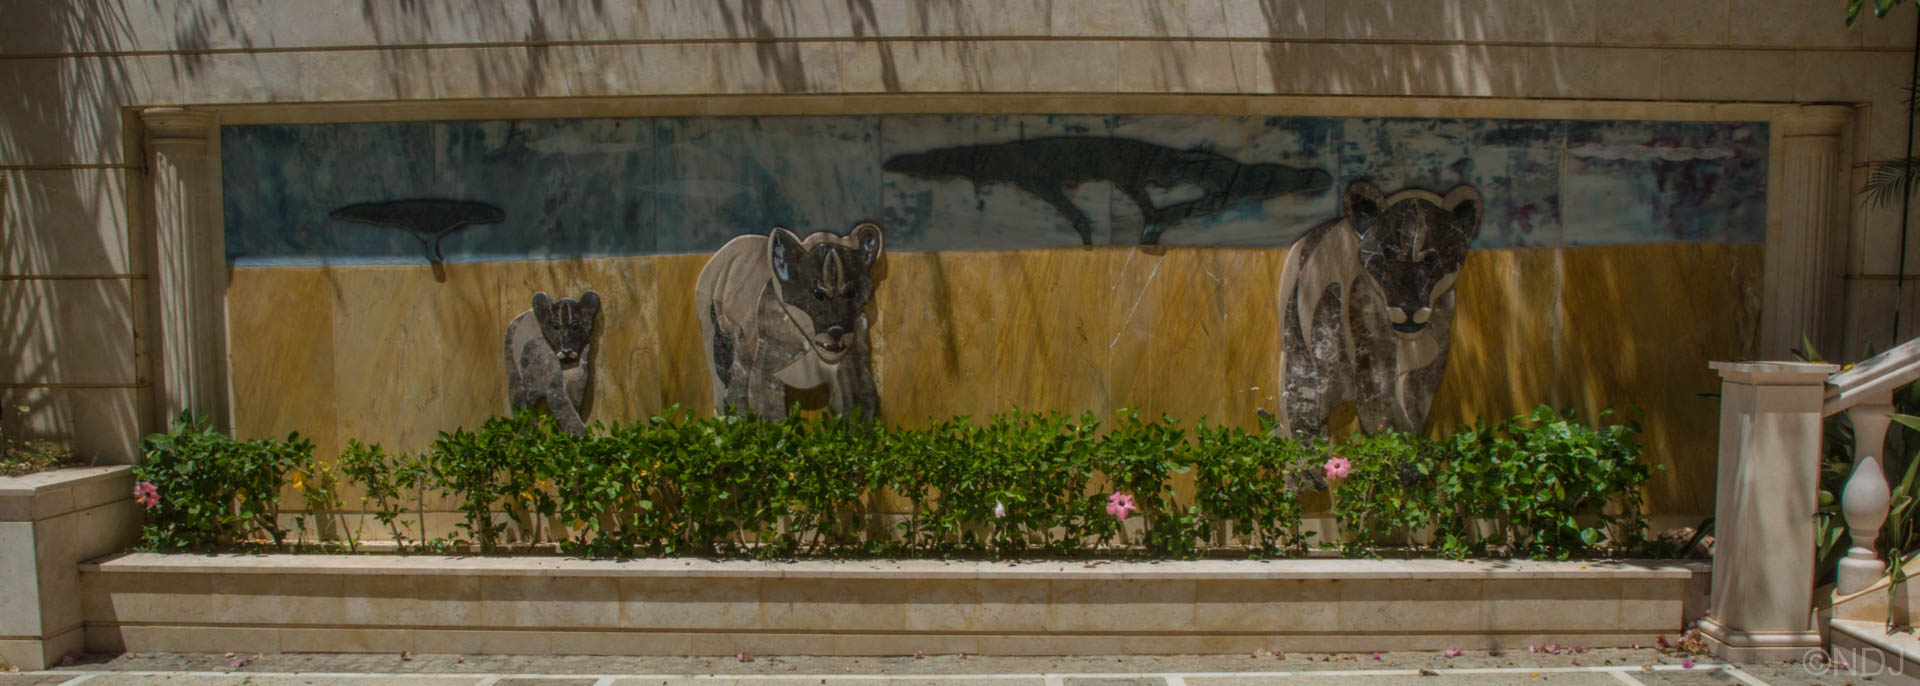 Mural diseño leones